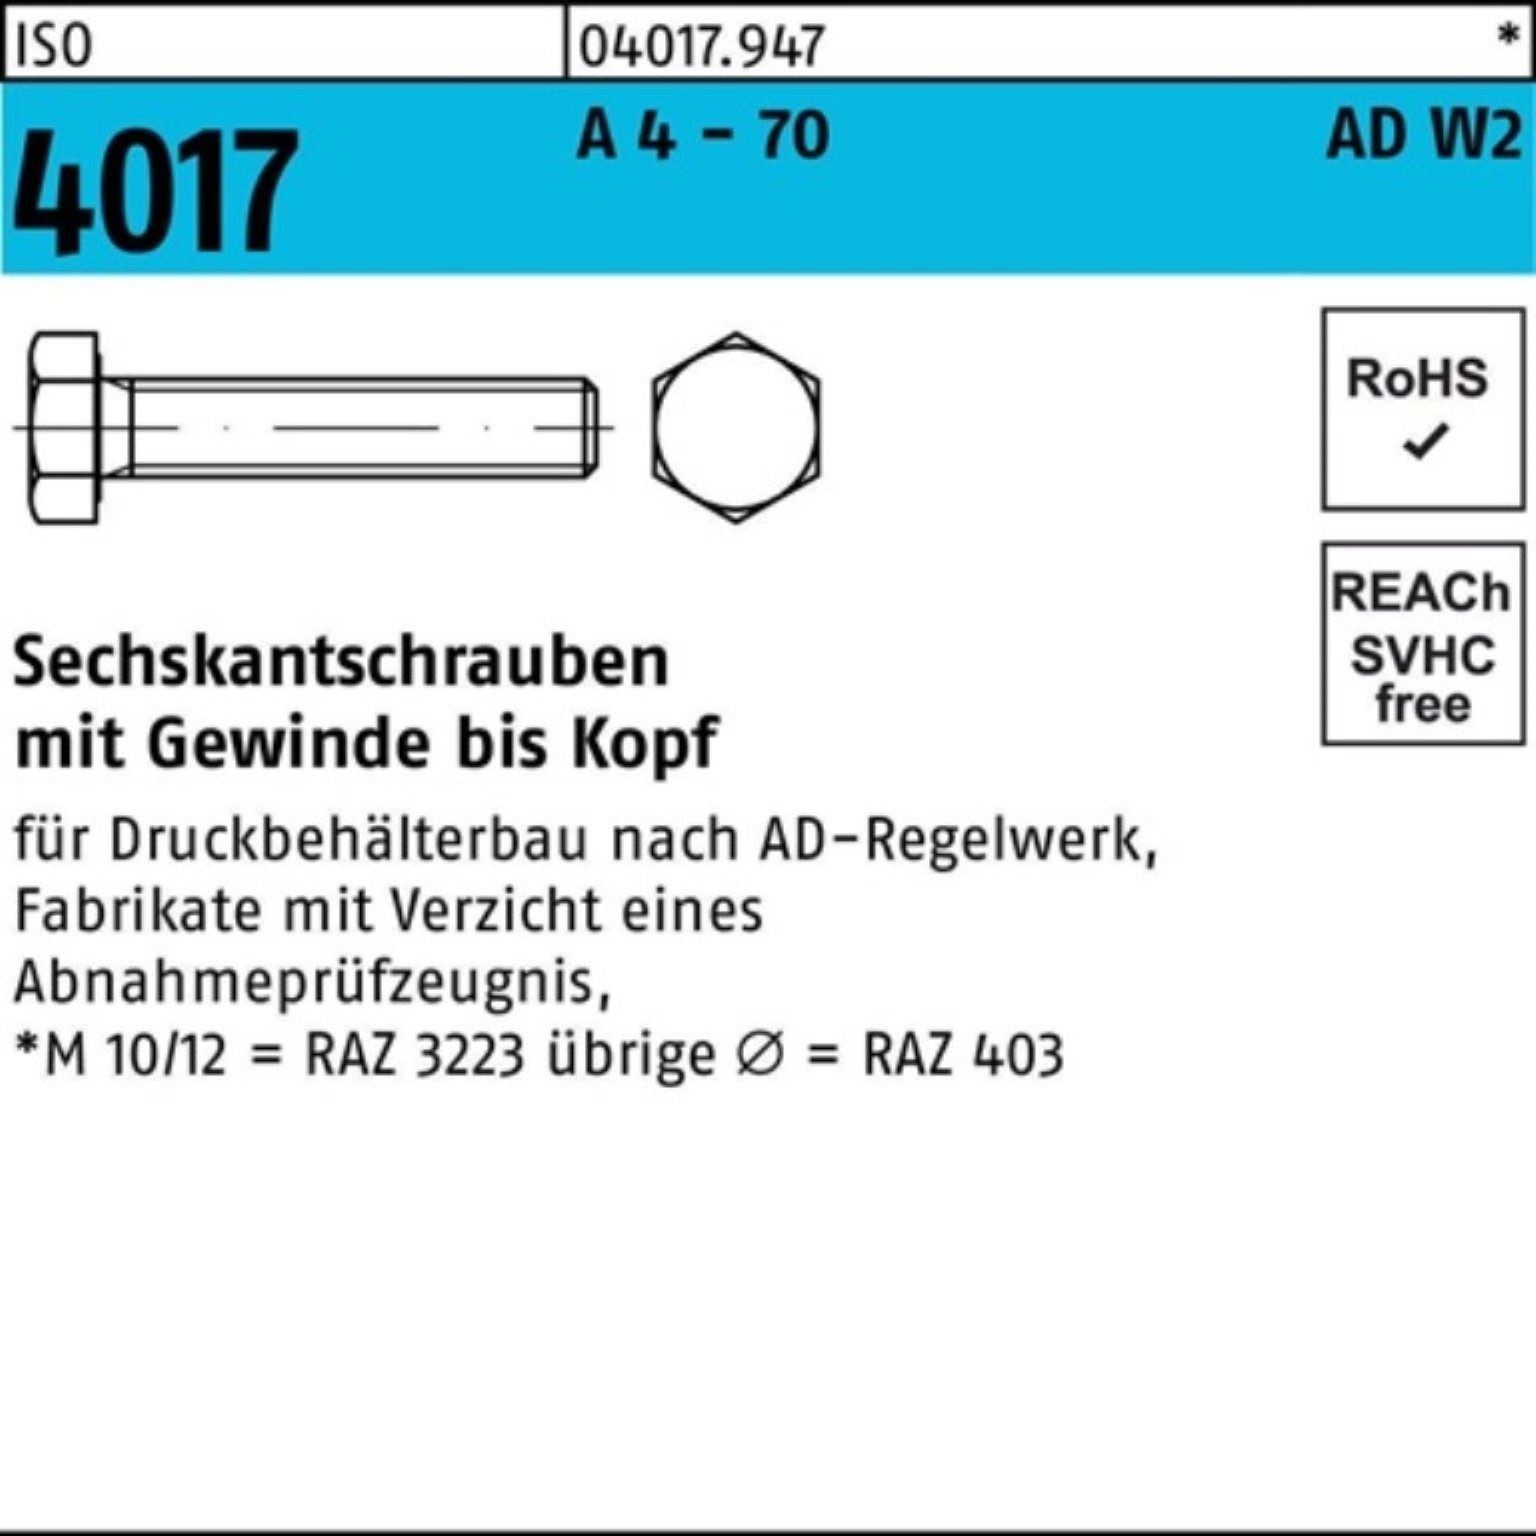 Bufab Sechskantschraube 100er Pack Sechskantschraube ISO 4017 VG M16x 75 A 4 - 70 AD-W2 25 St